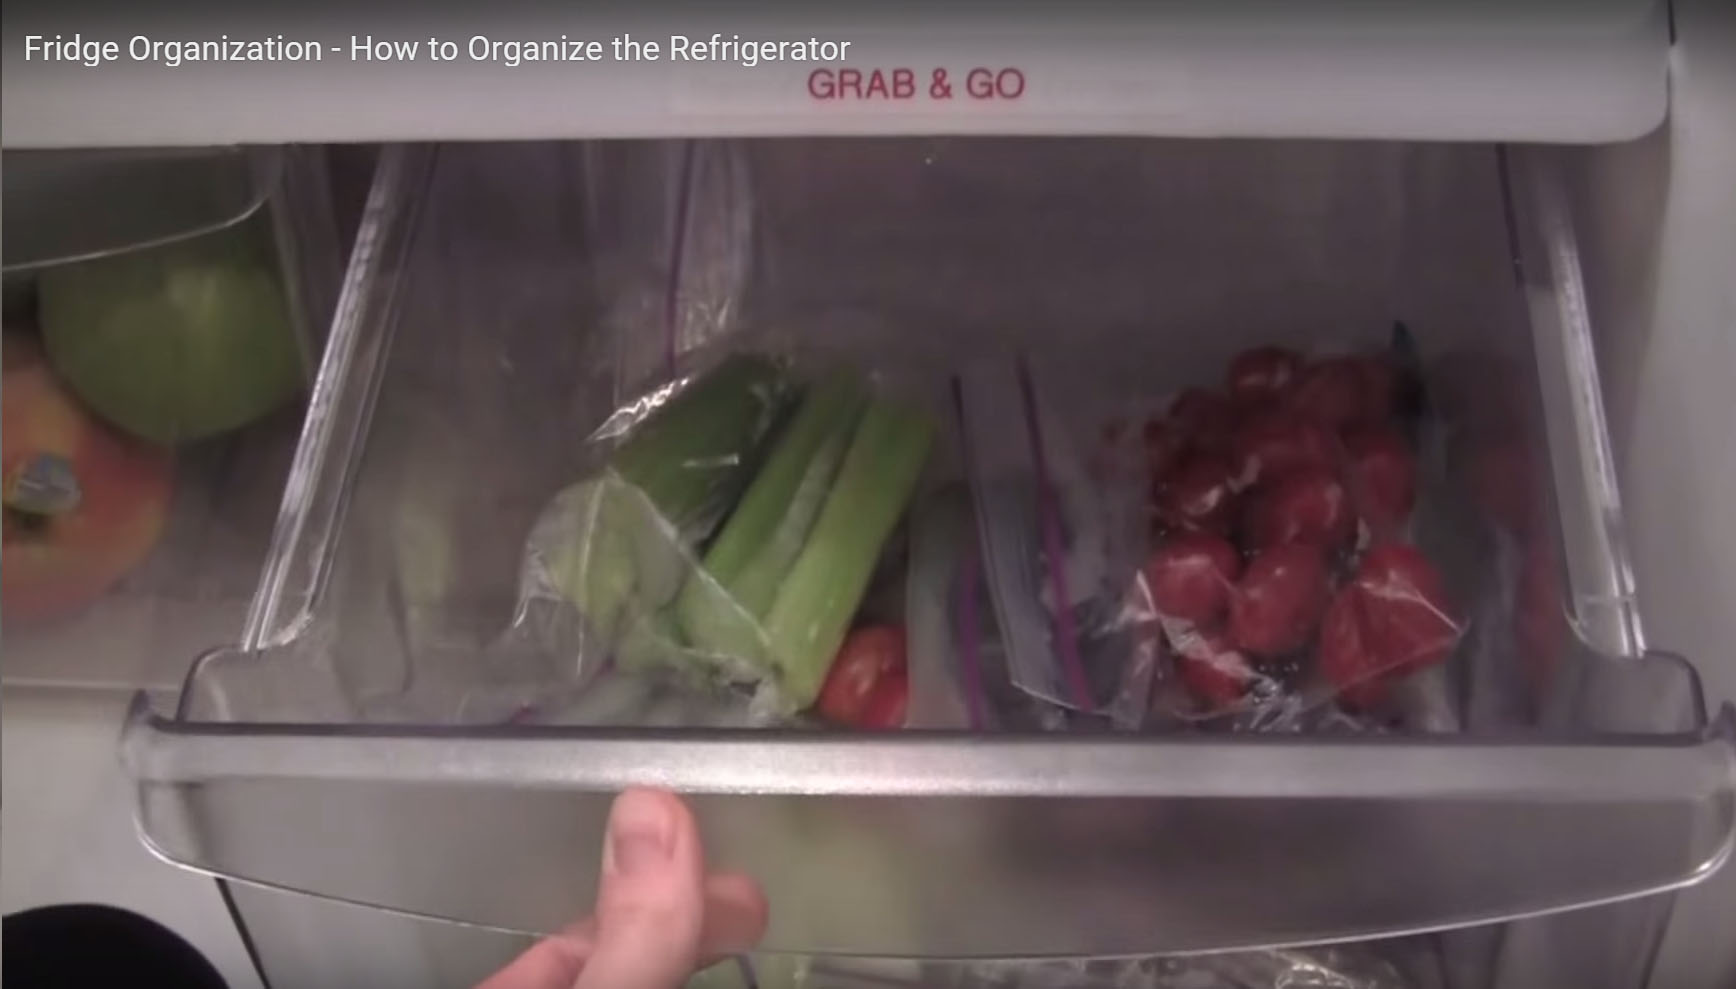 [VIDEO]: Fridge Organization - How to Organize the Refrigerator